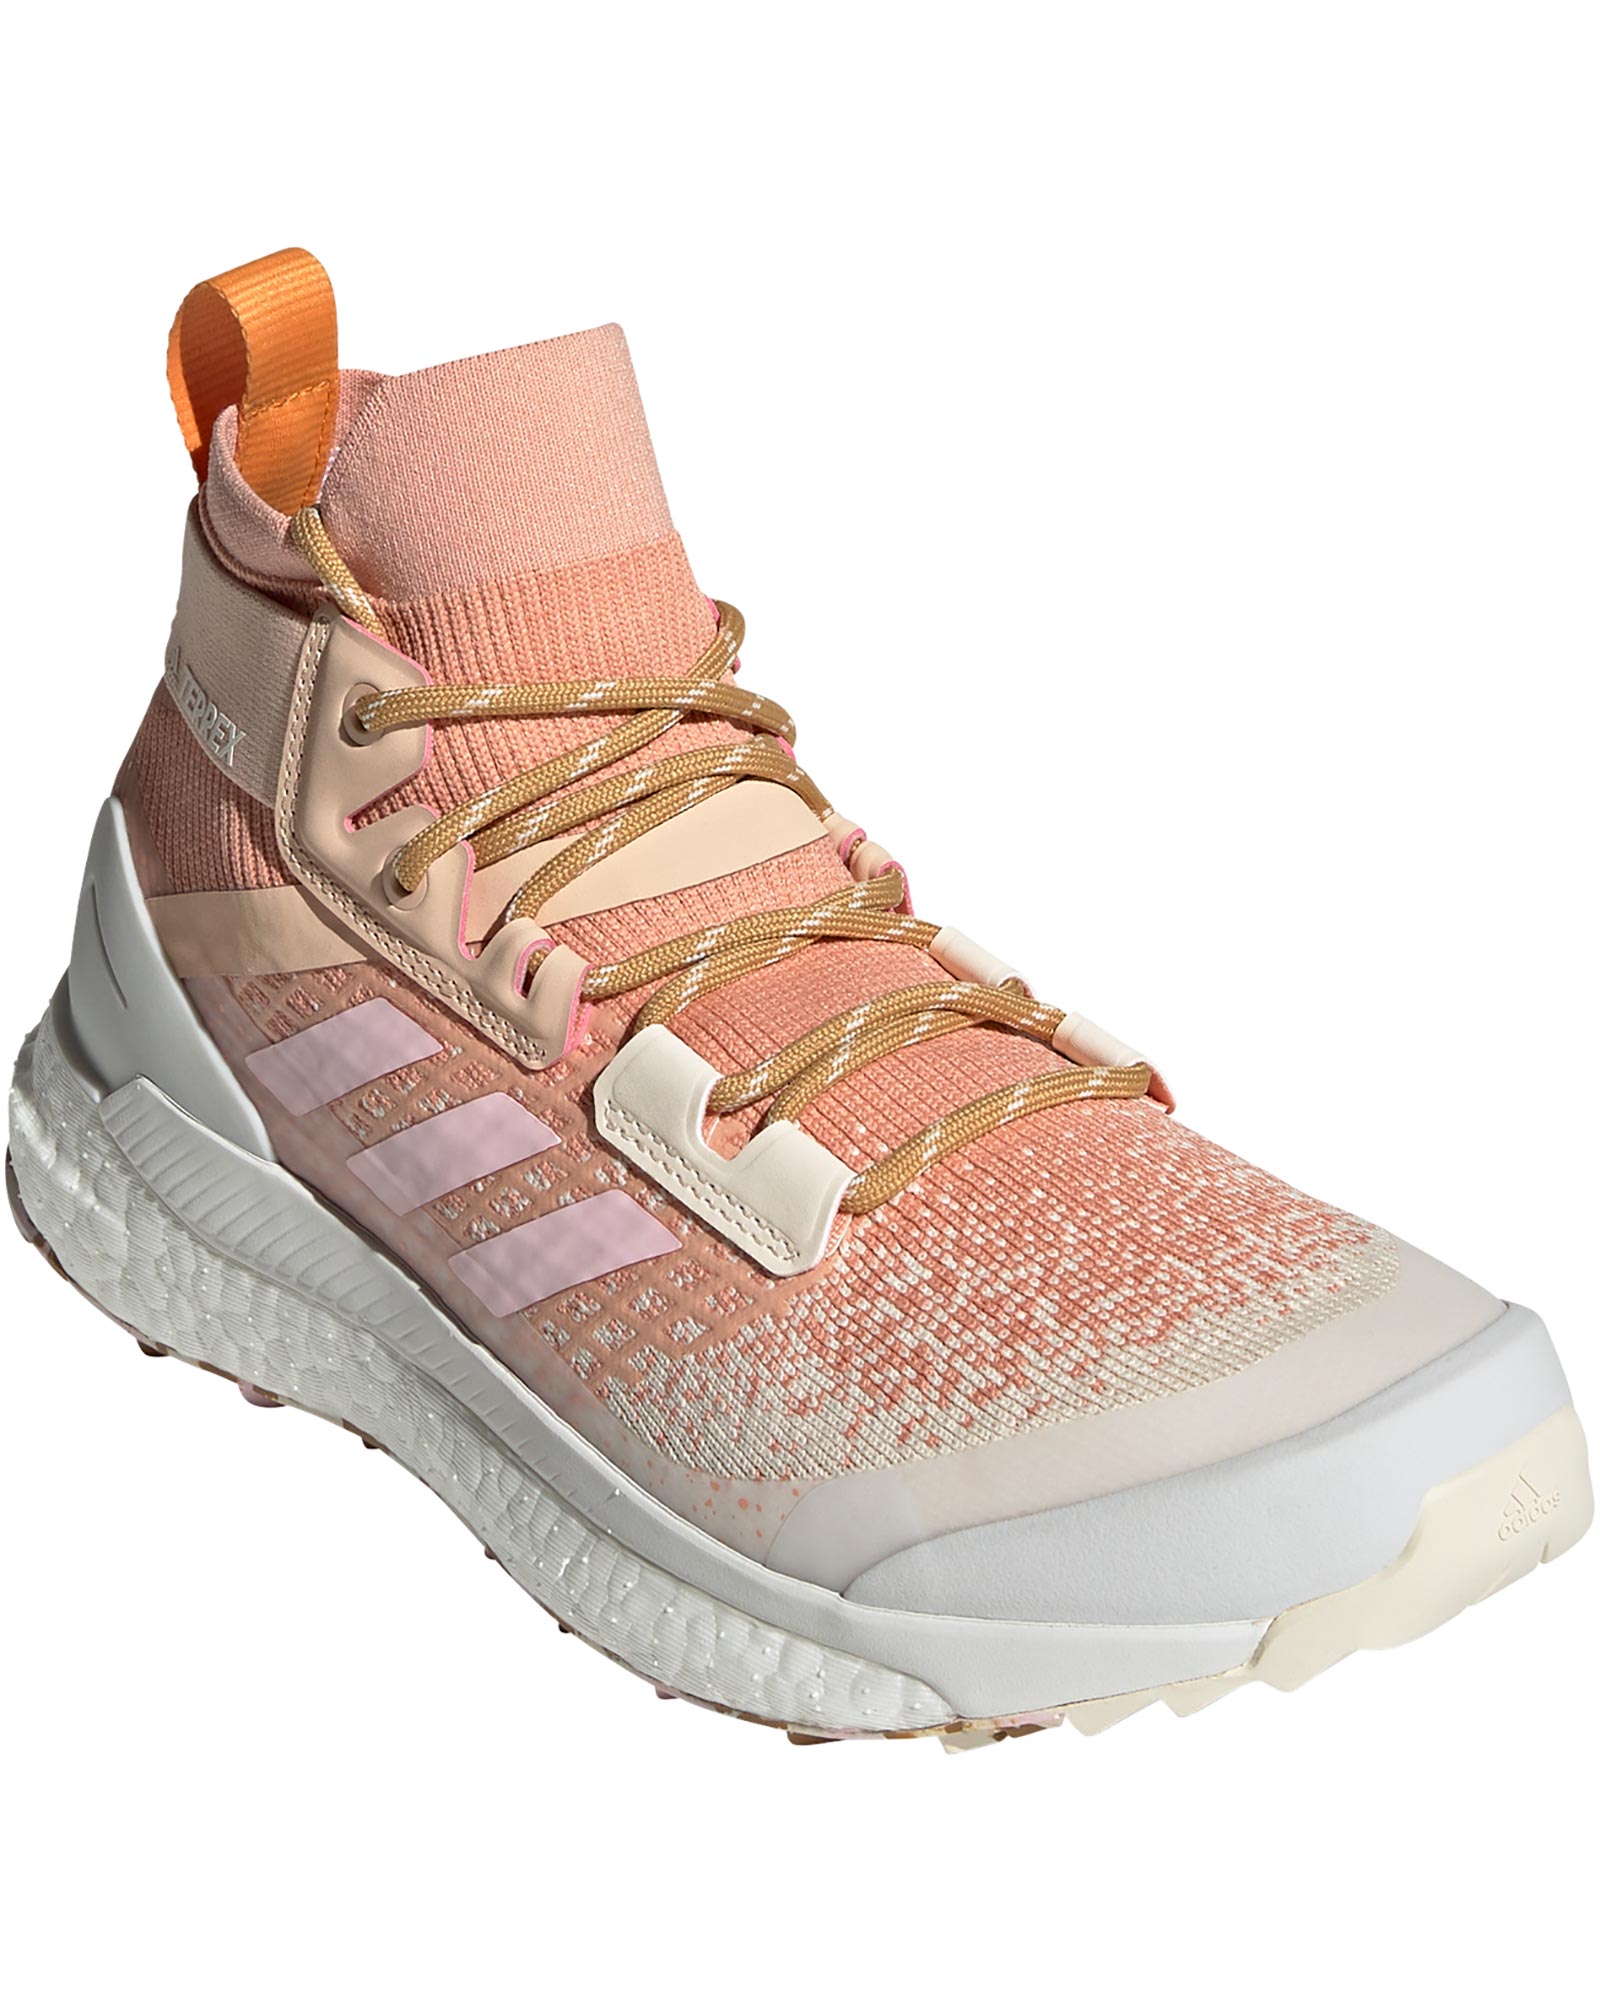 adidas TERREX Free Hiker Primeblue Women’s Boots - Ambient Blush/Clear Pink/Wonder White UK 7